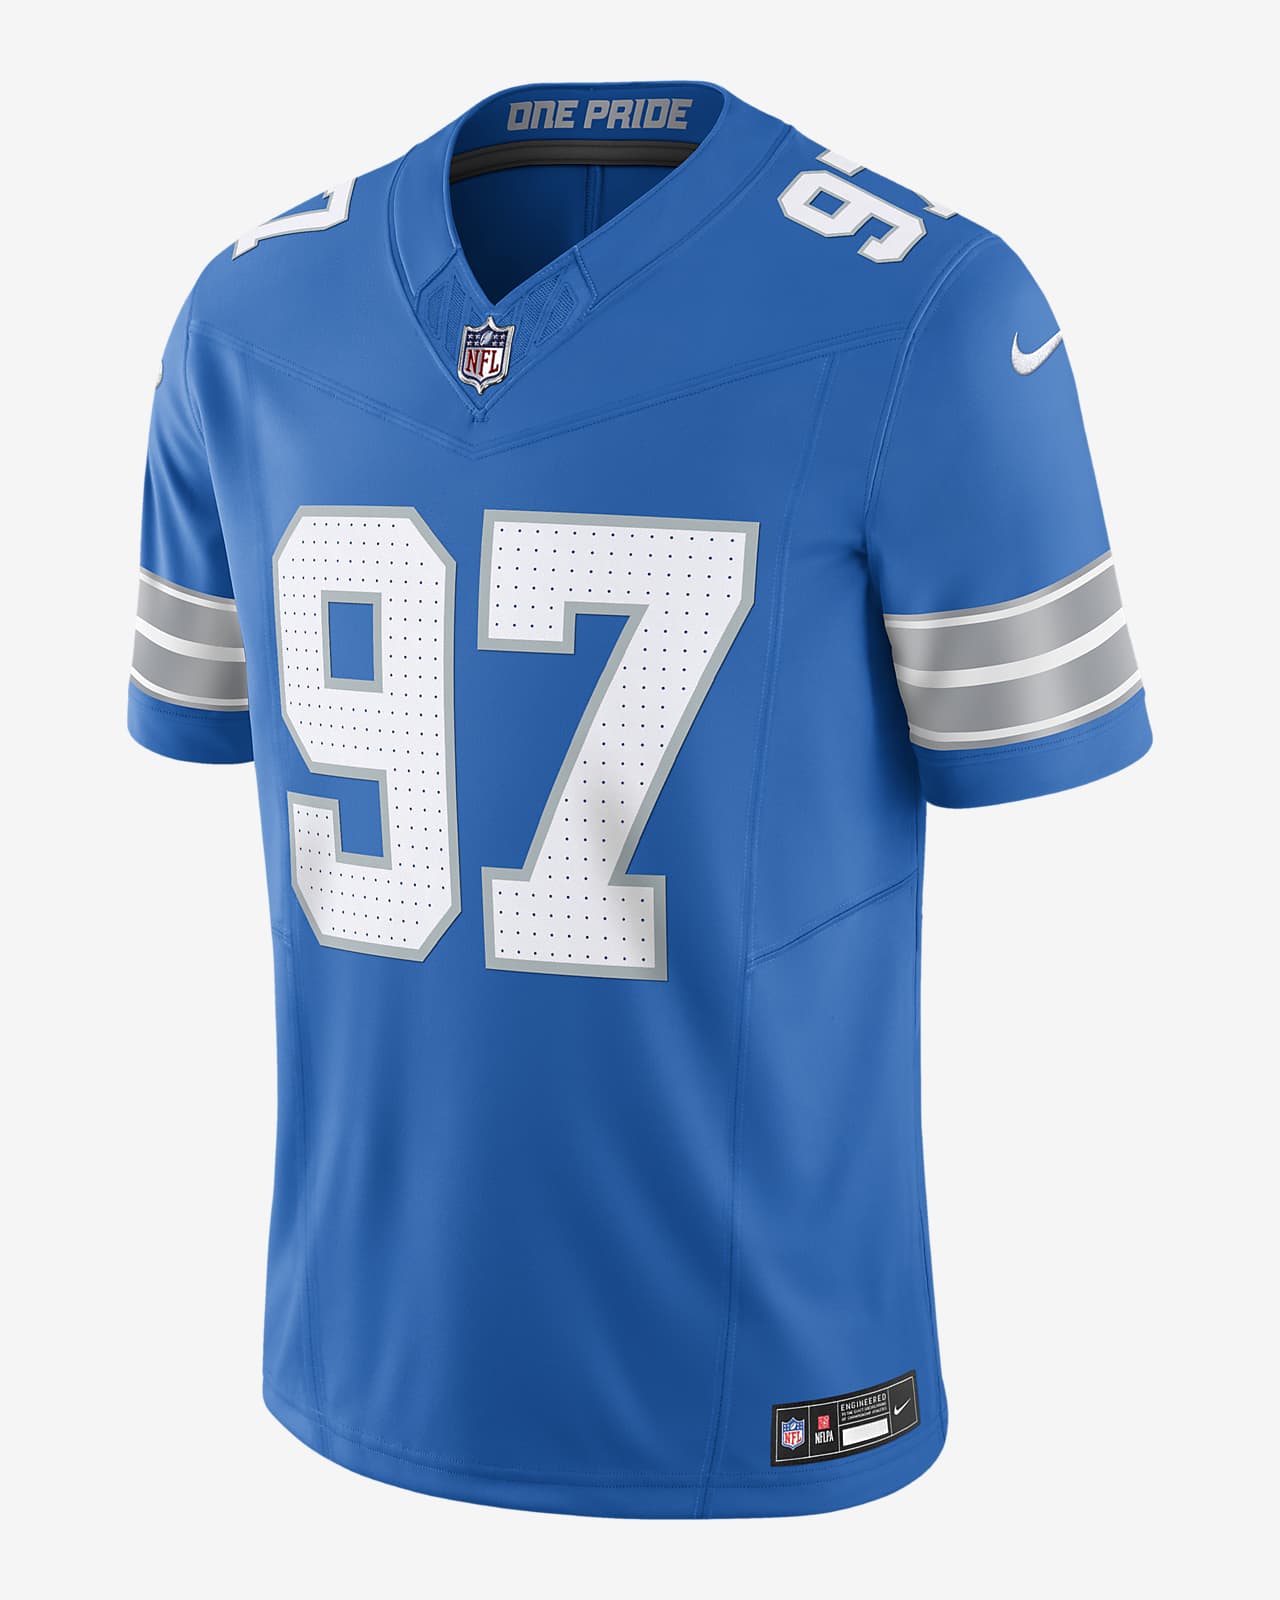 Jersey de fútbol americano Nike Dri-FIT de la NFL Limited para hombre Aidan Hutchinson Detroit Lions